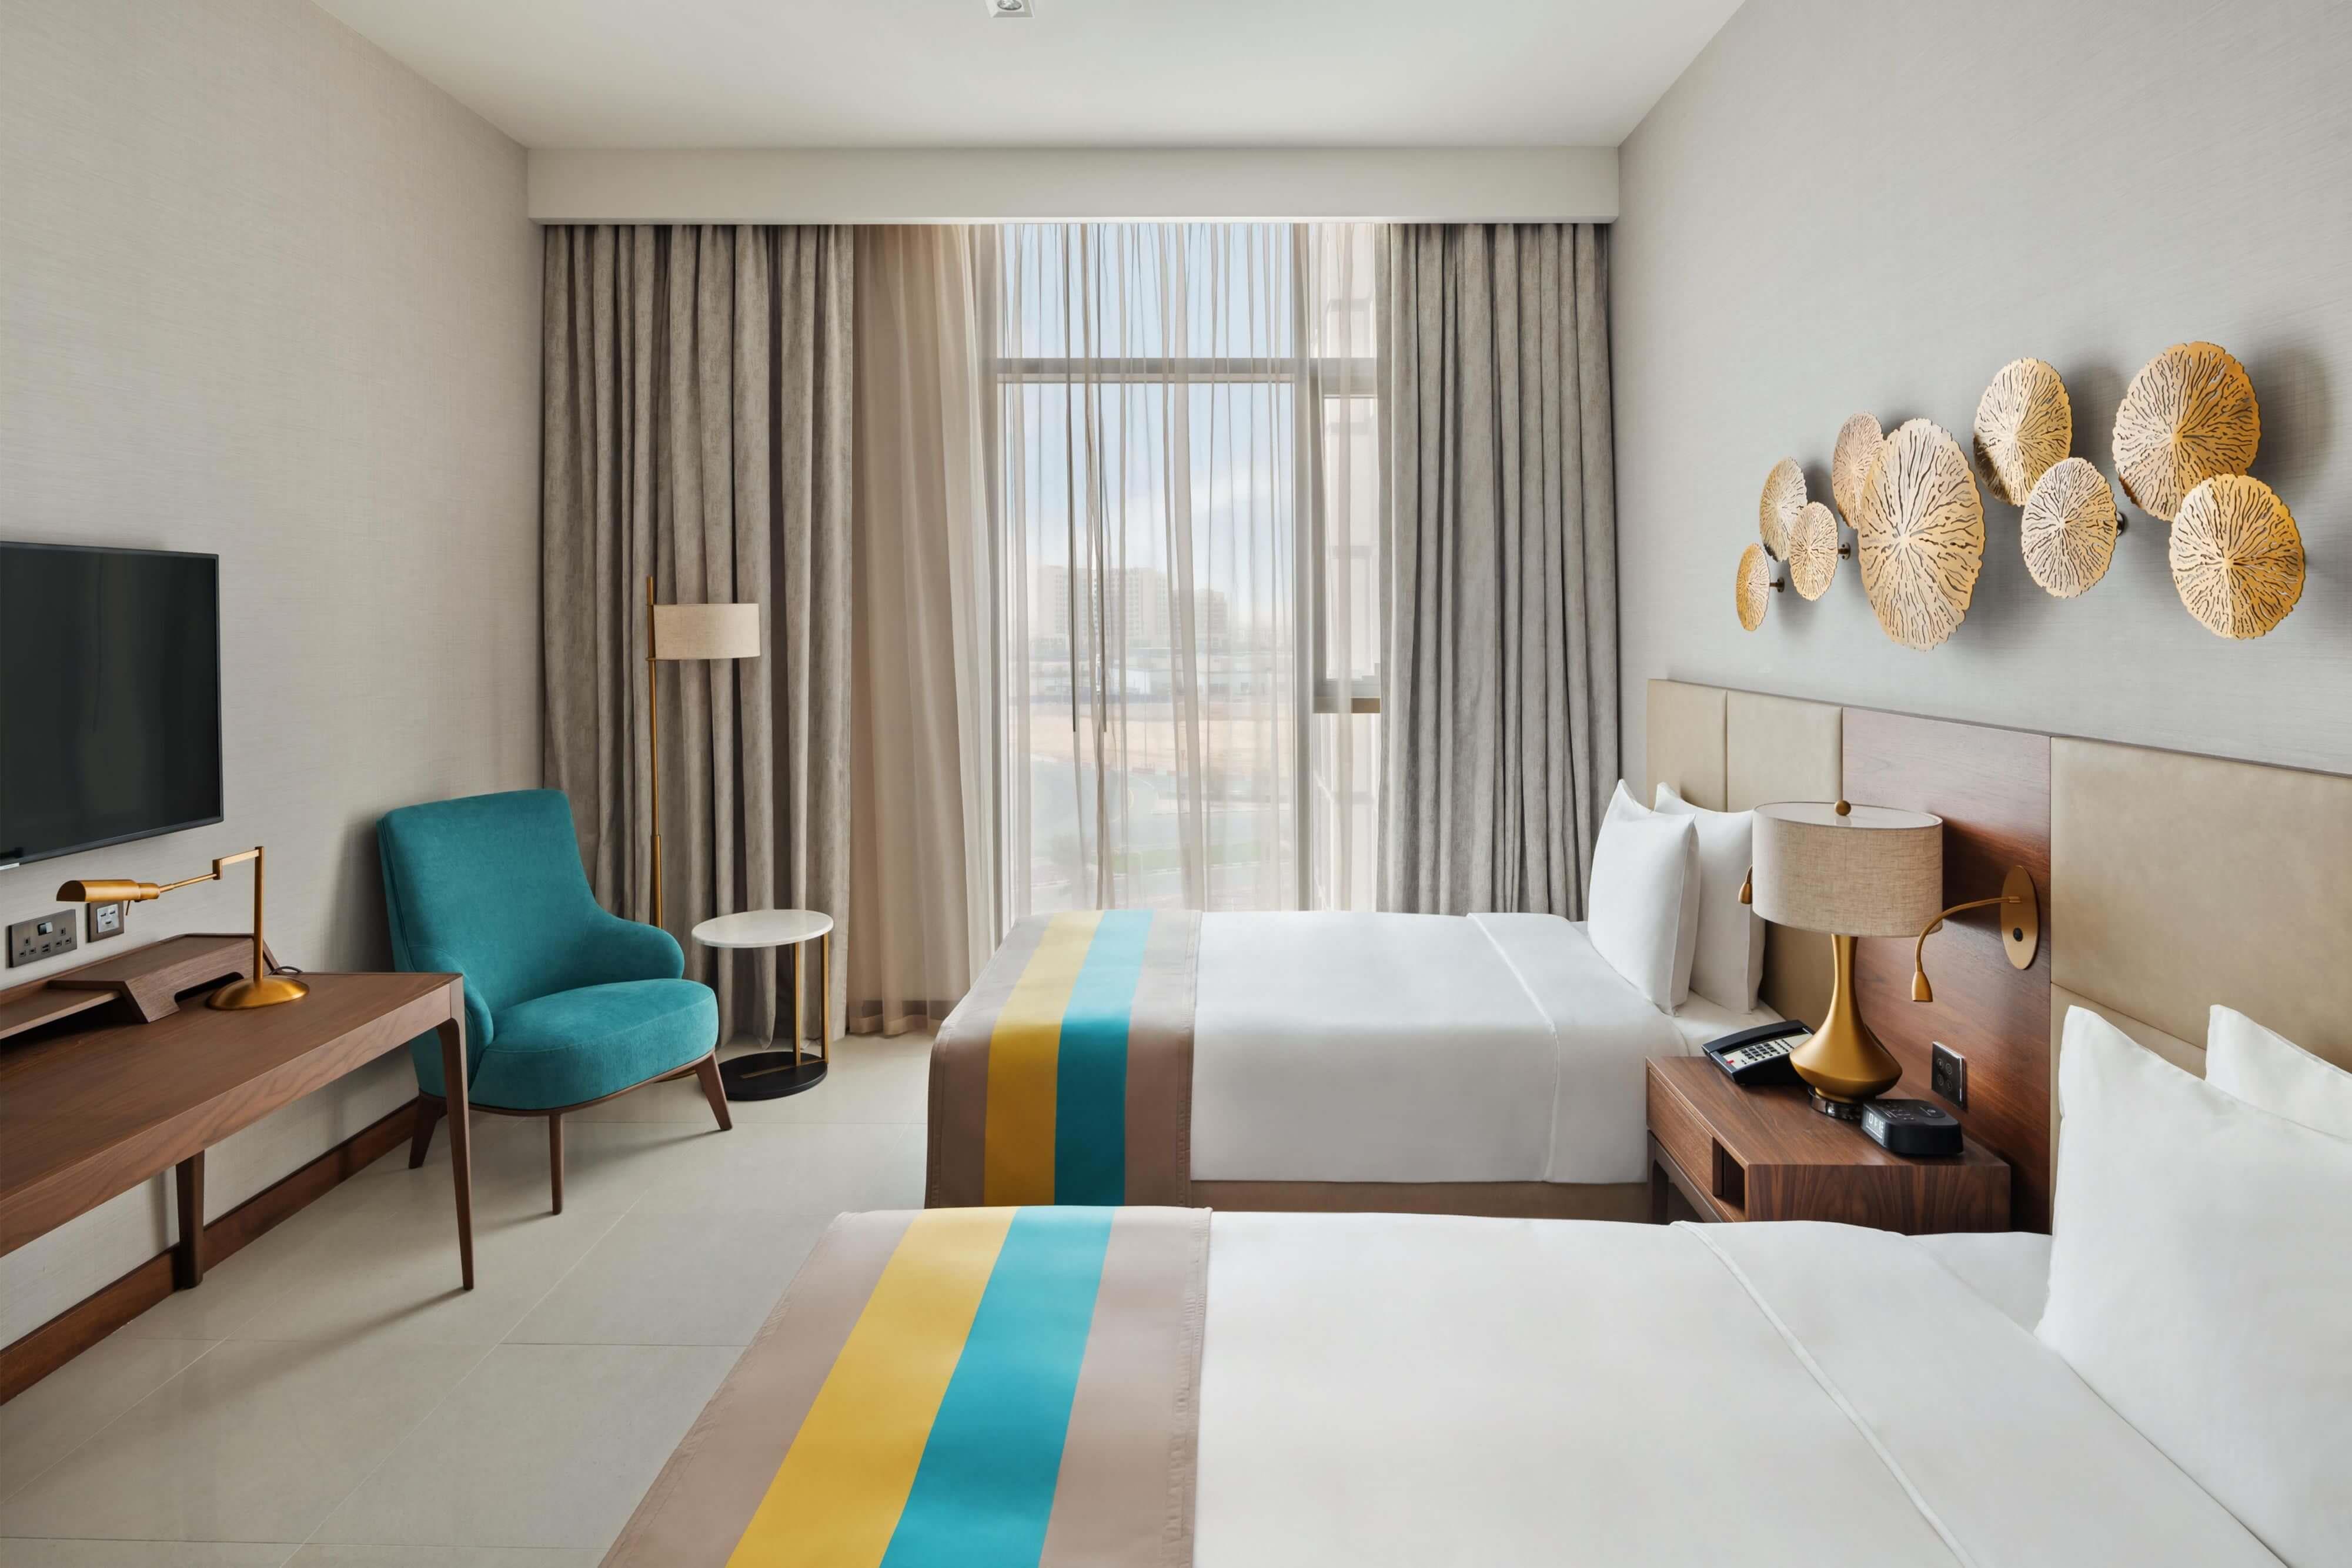 Holiday Inn Dubai al Maktoum Airport 4*